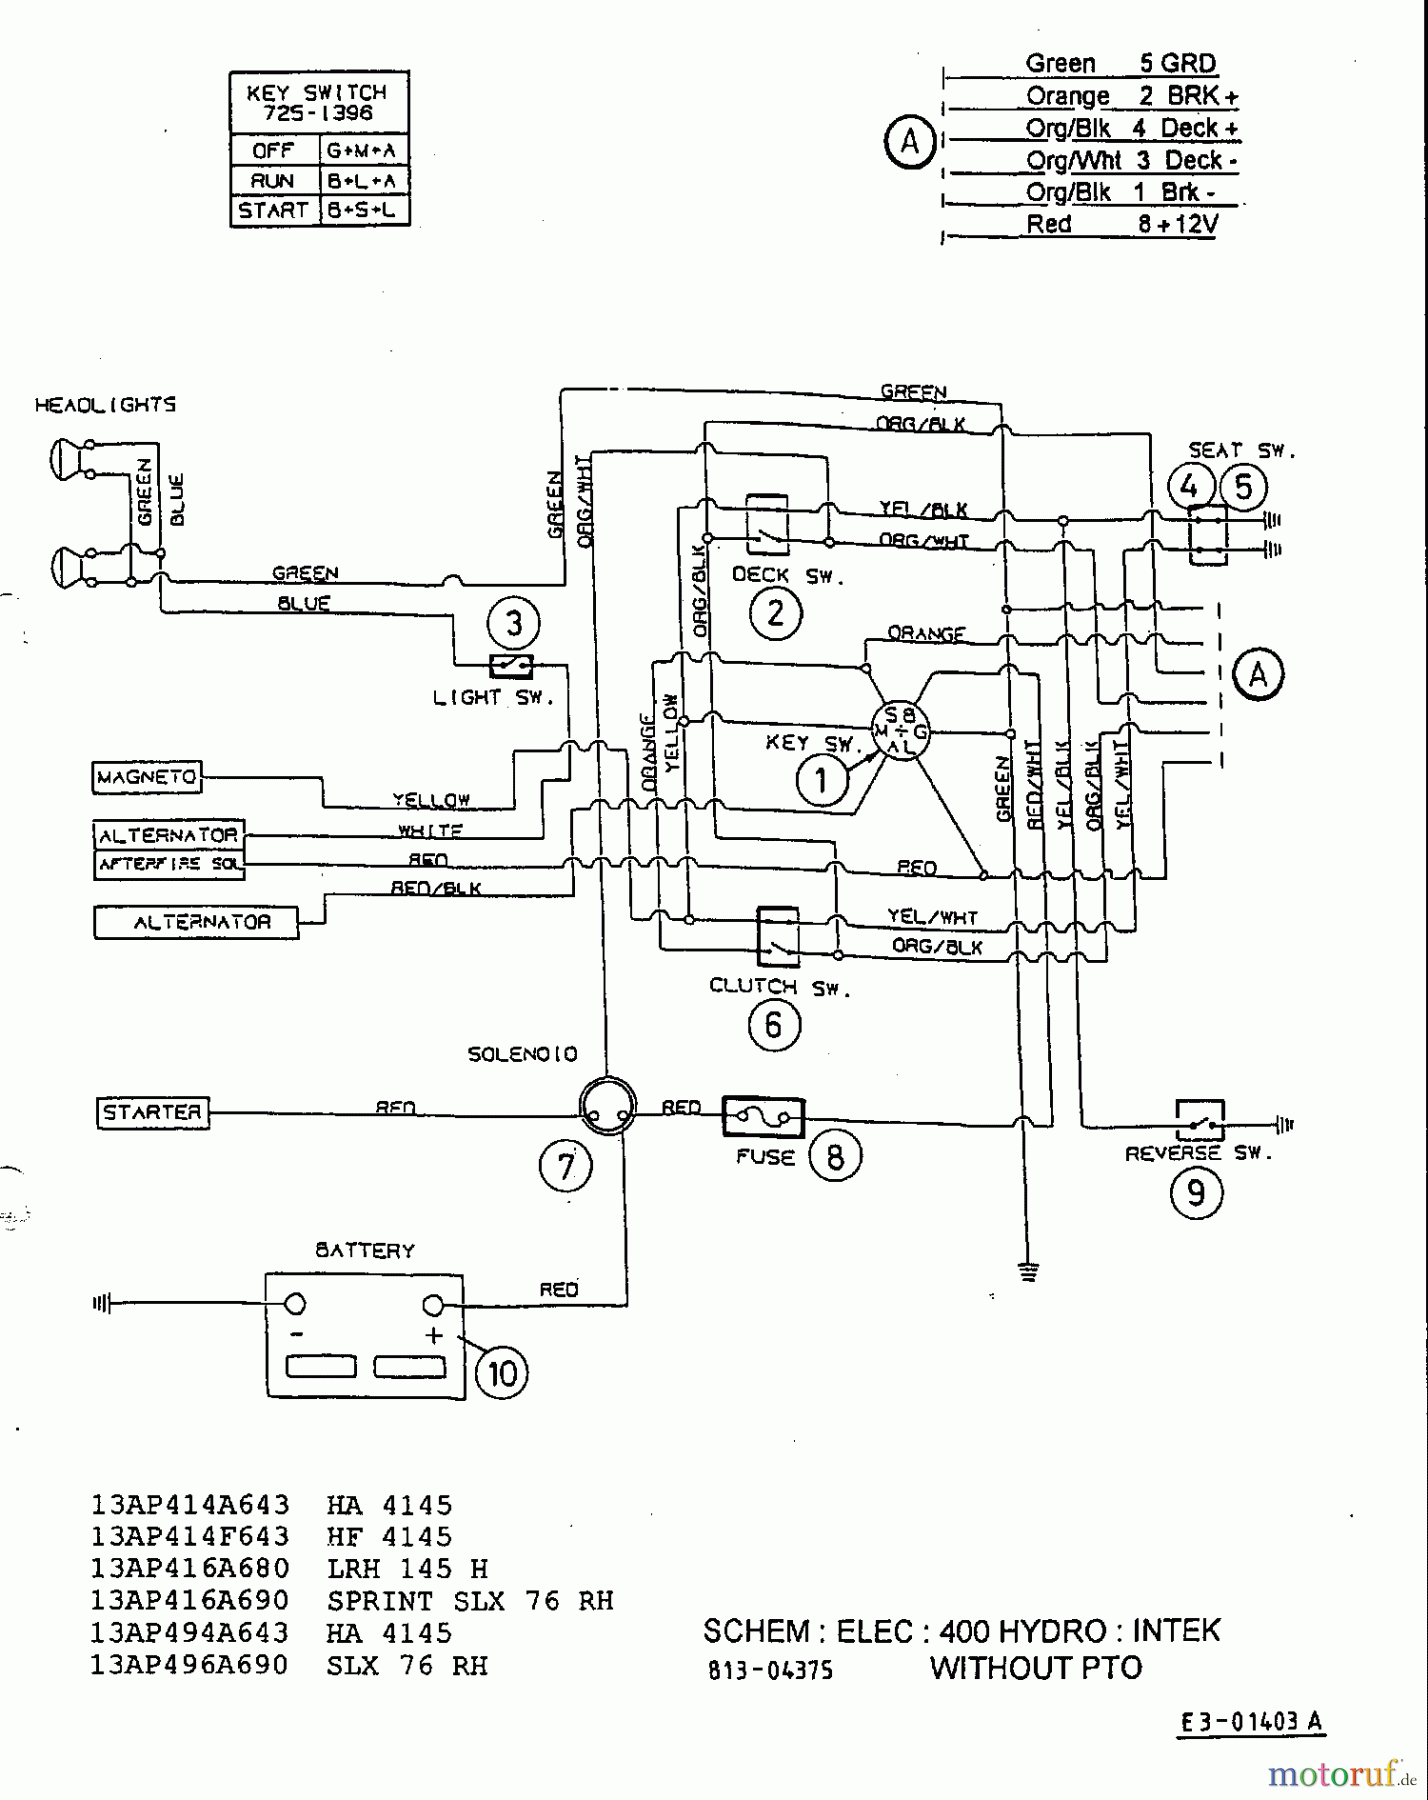  Gutbrod Rasentraktoren Sprint SLX 76 RH 13AP416A690  (1999) Schaltplan Intek ohne Elektromagnetkupplung